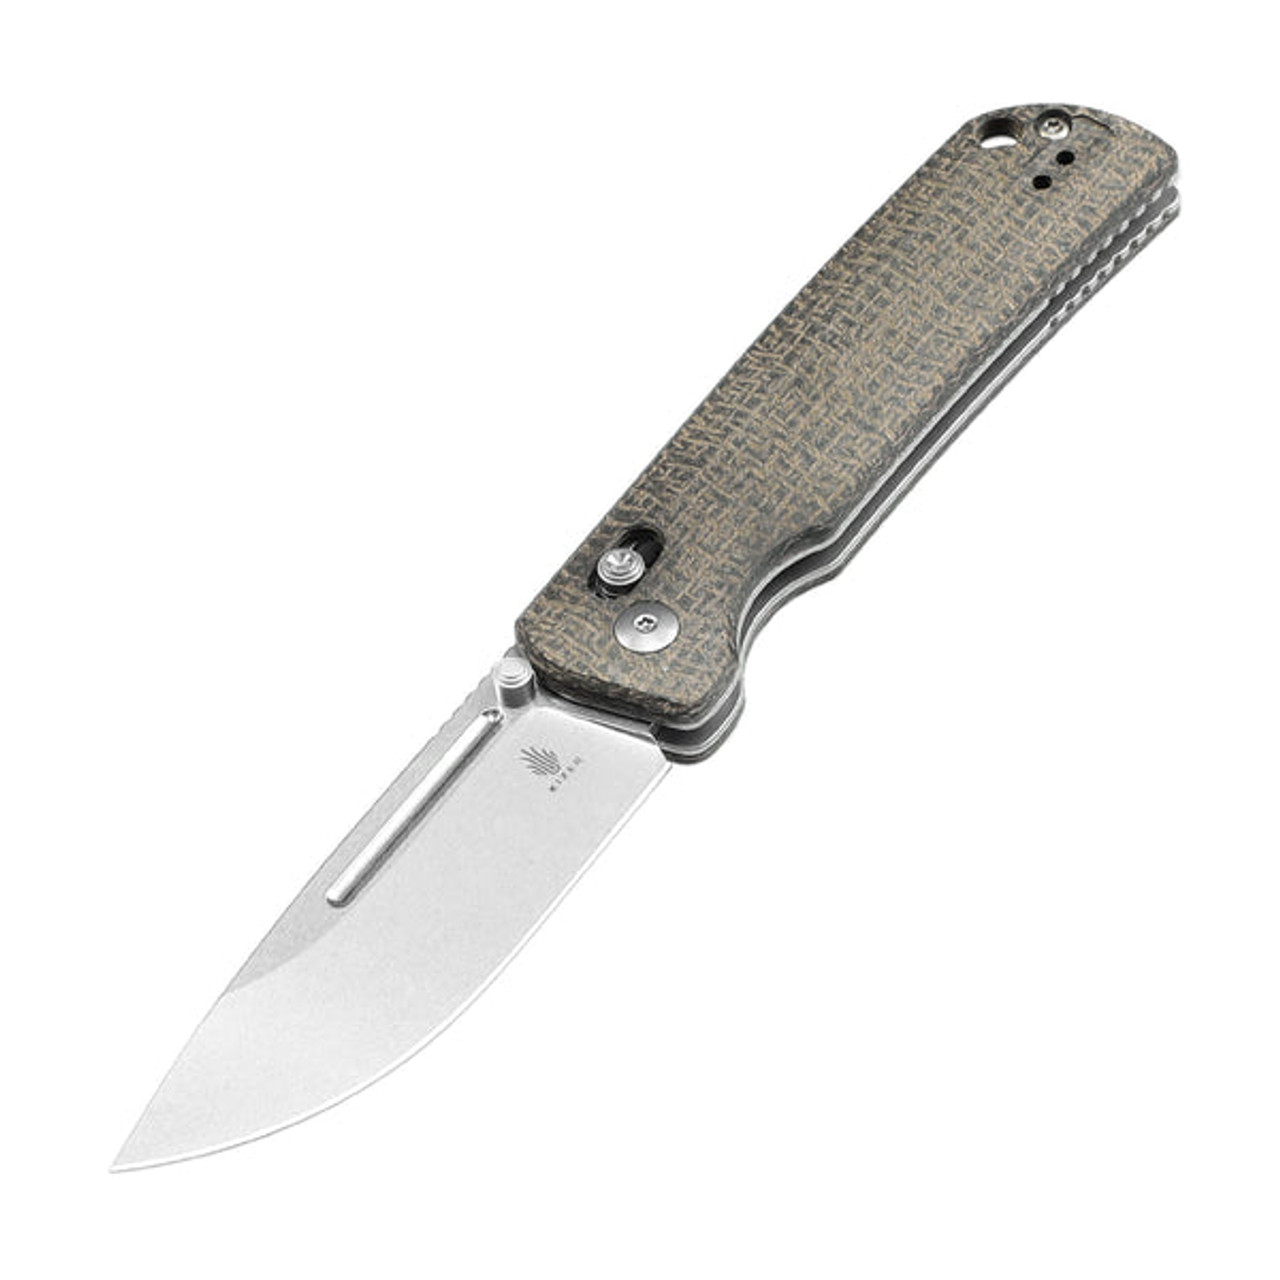 Kizer Knives Escort Folding Knife - 3.31